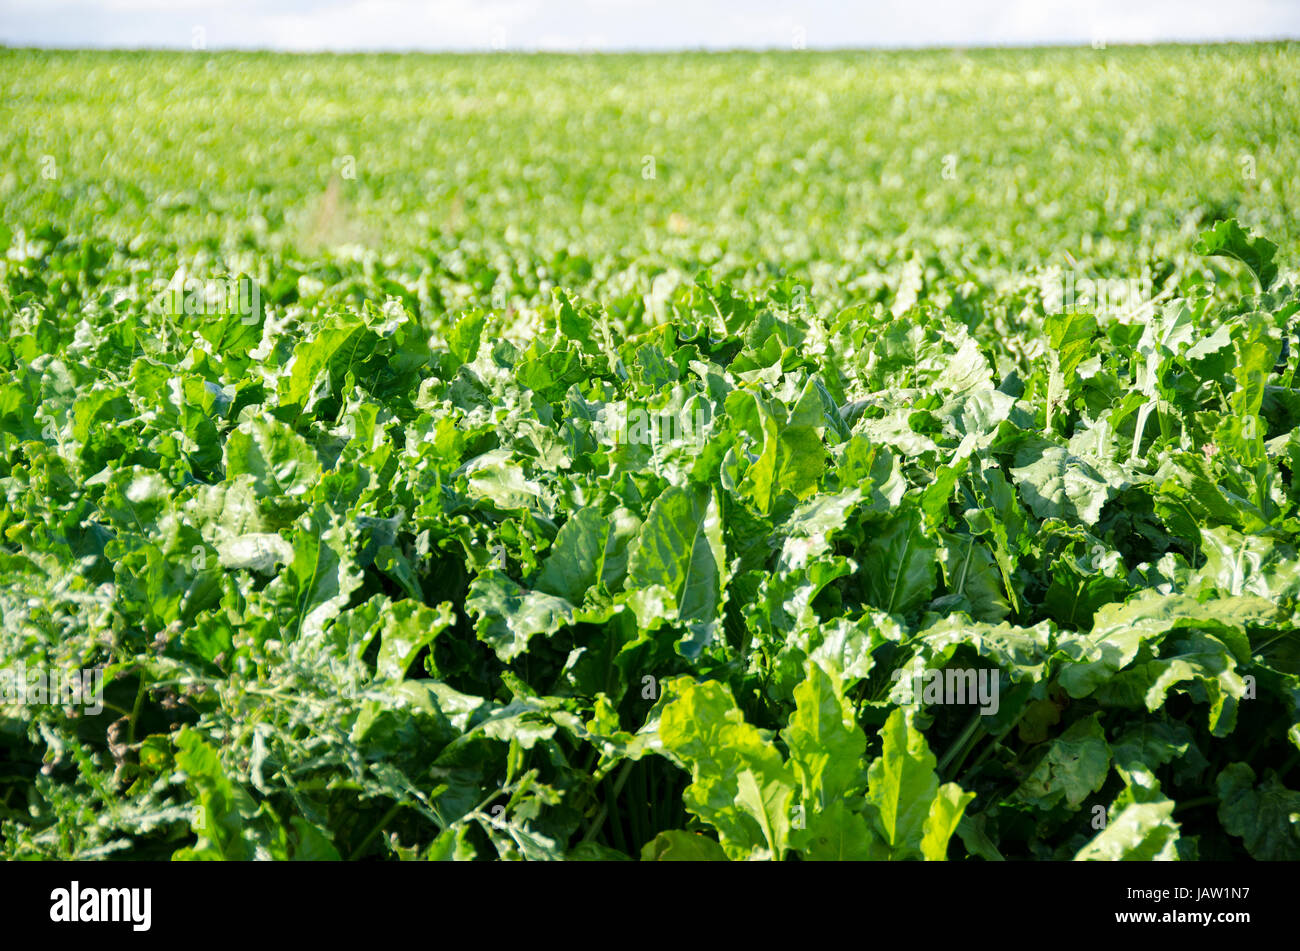 A field of sugar beet plants, beta vulgaris on a sunny day Stock Photo